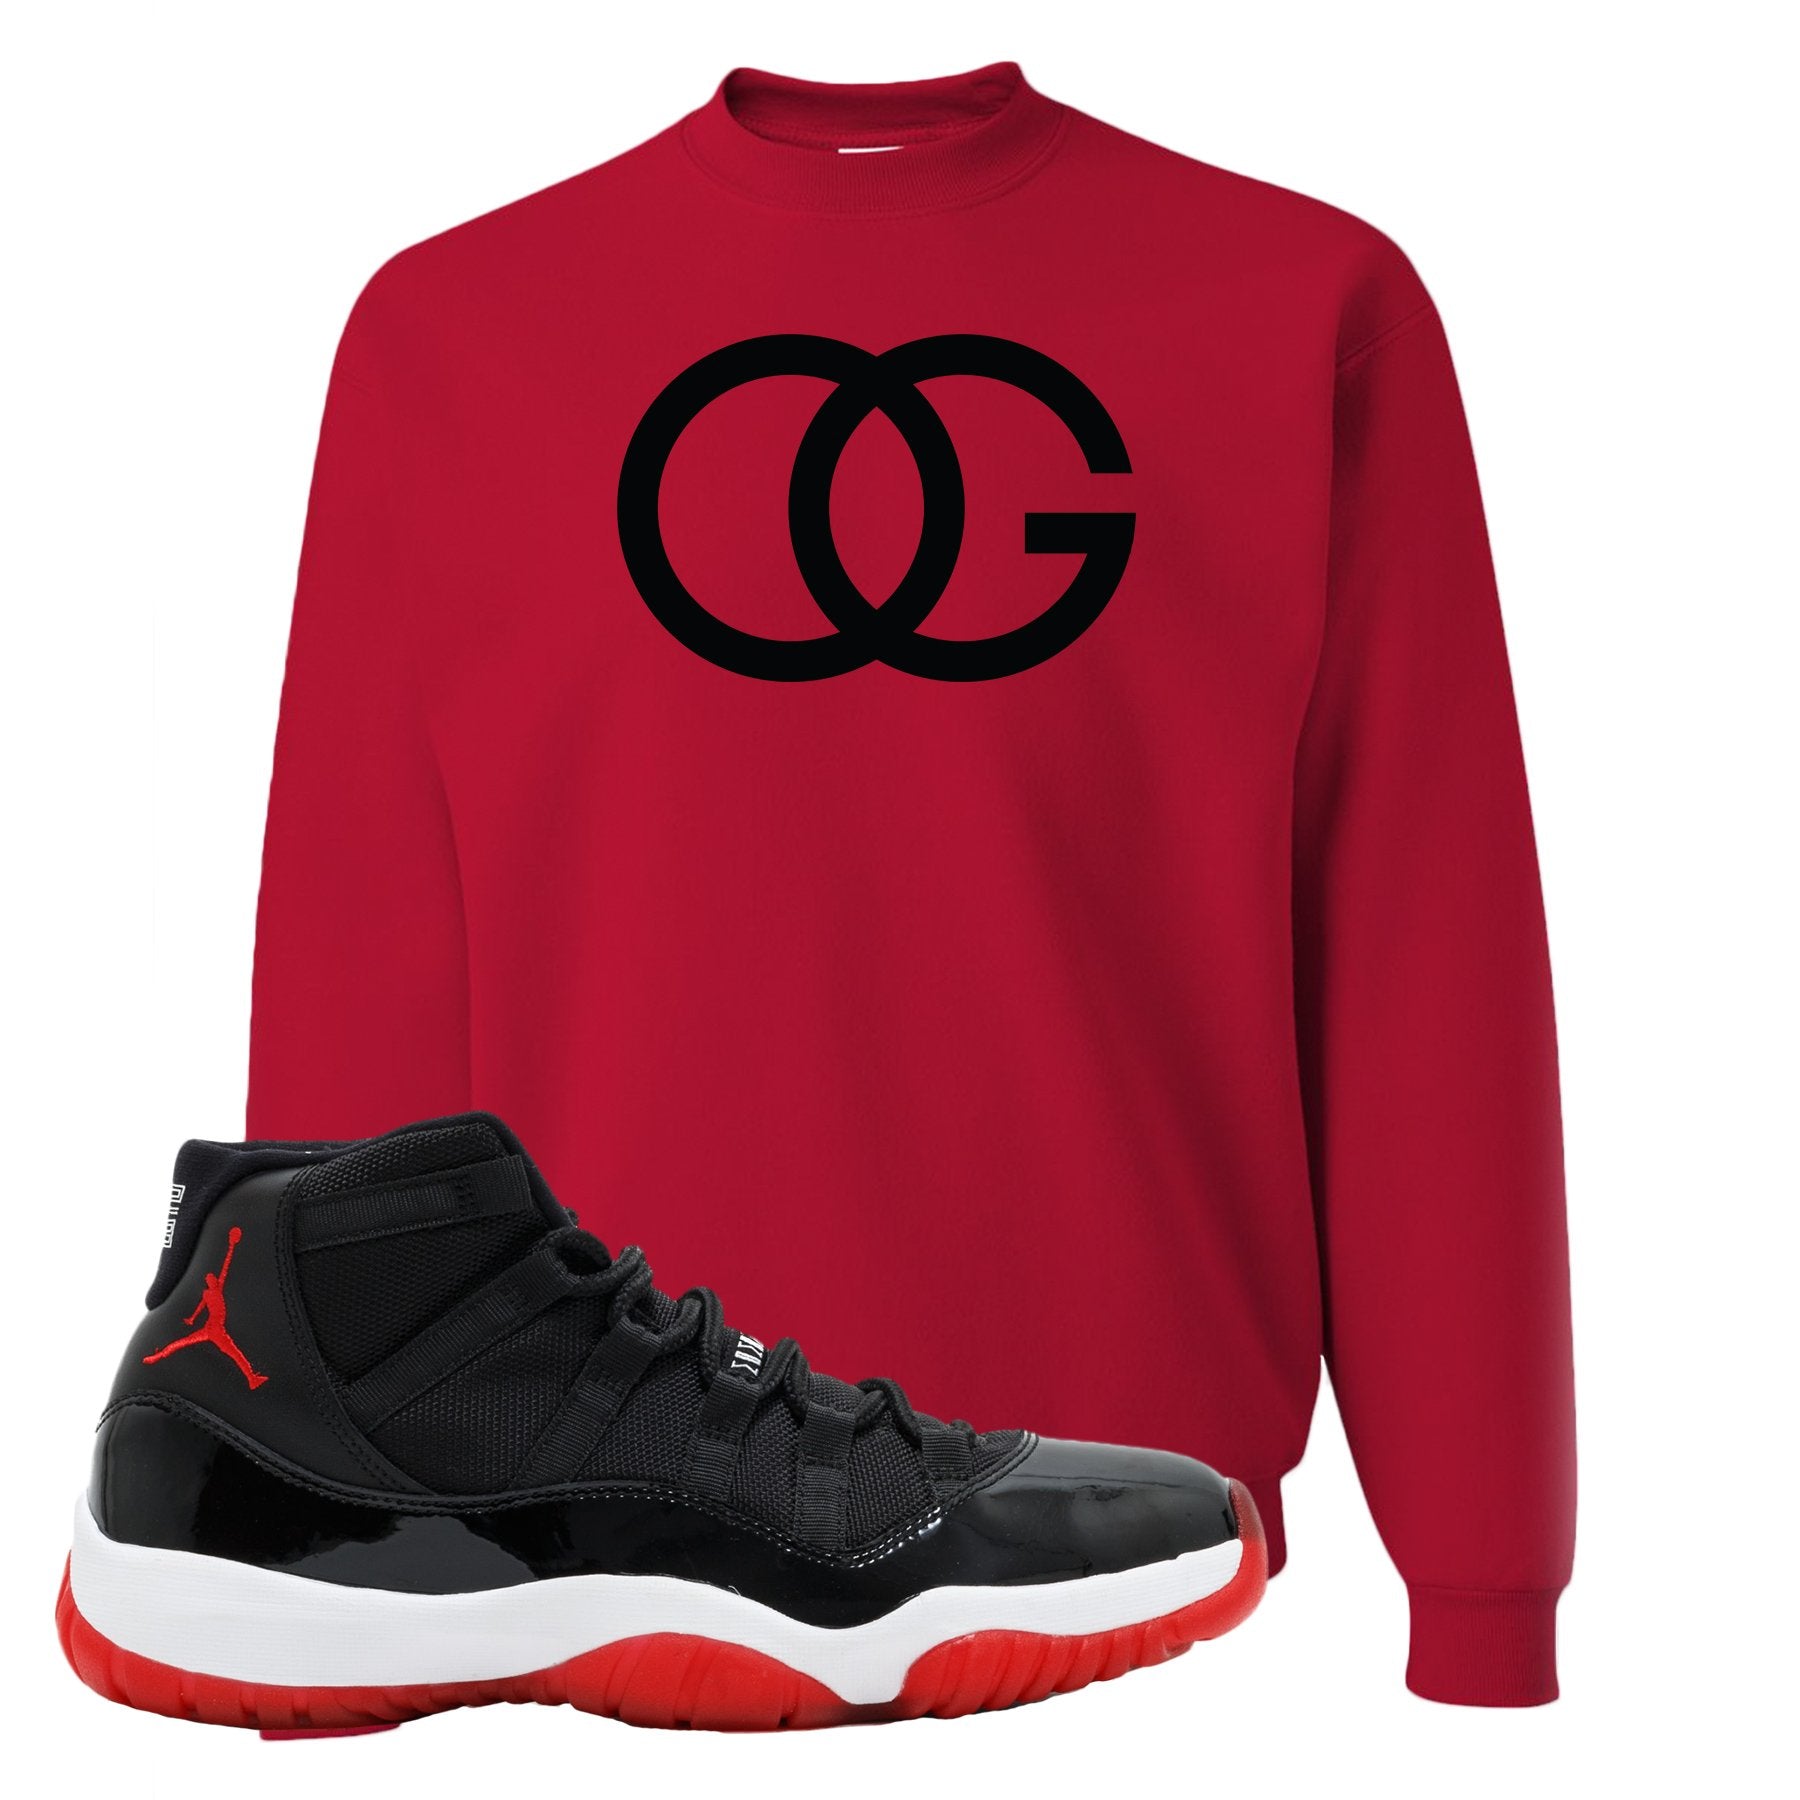 Jordan 11 Bred OG Red Sneaker Hook Up Crewneck Sweatshirt